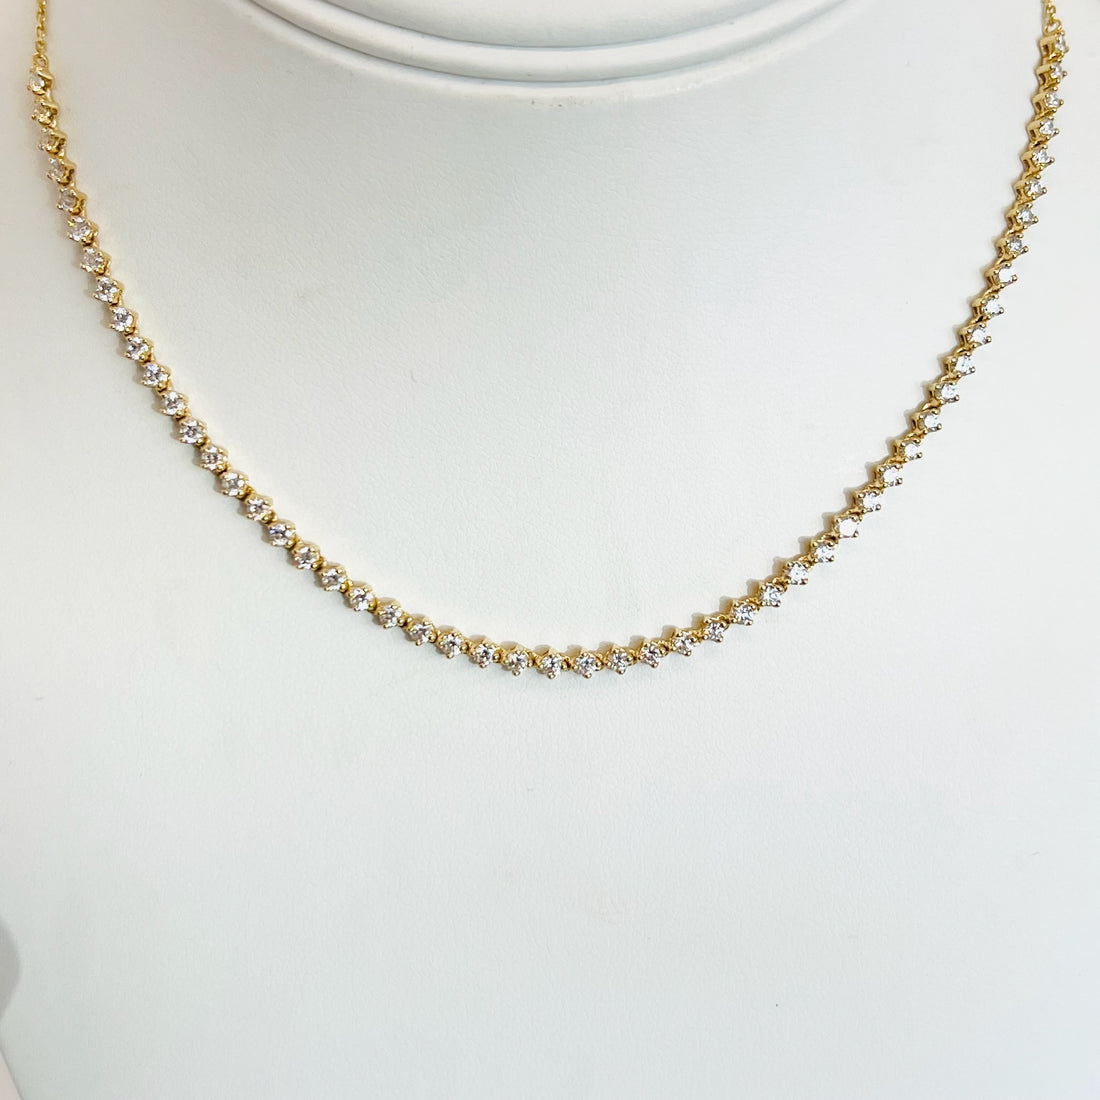 Adjustable 14k gold diamond tennis necklace